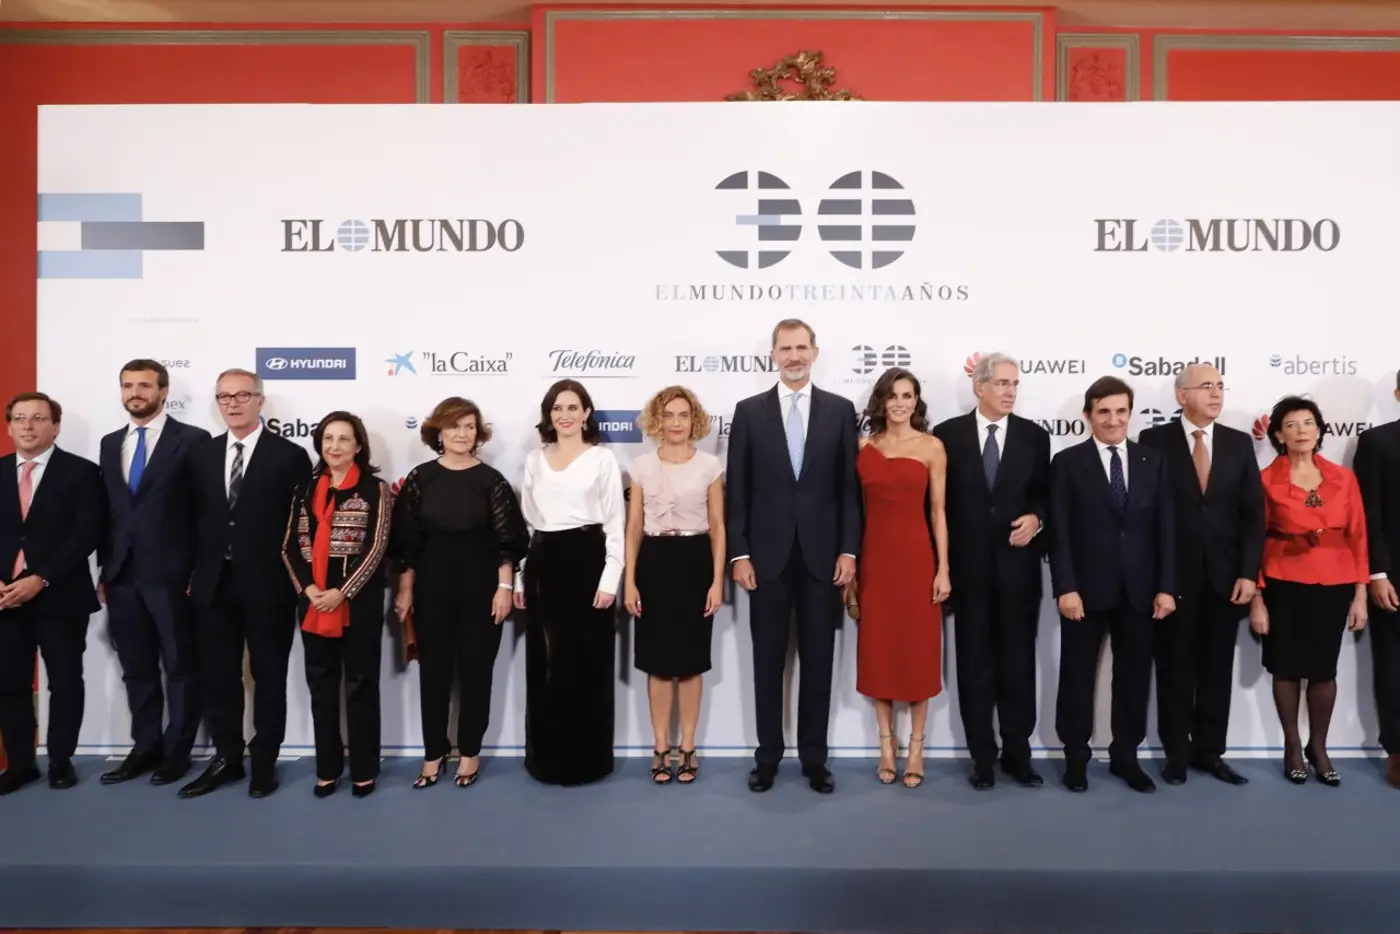 Queen Letizia wore red off-shoulder dress from Roberto Torretta at the El Mundo Anniversary